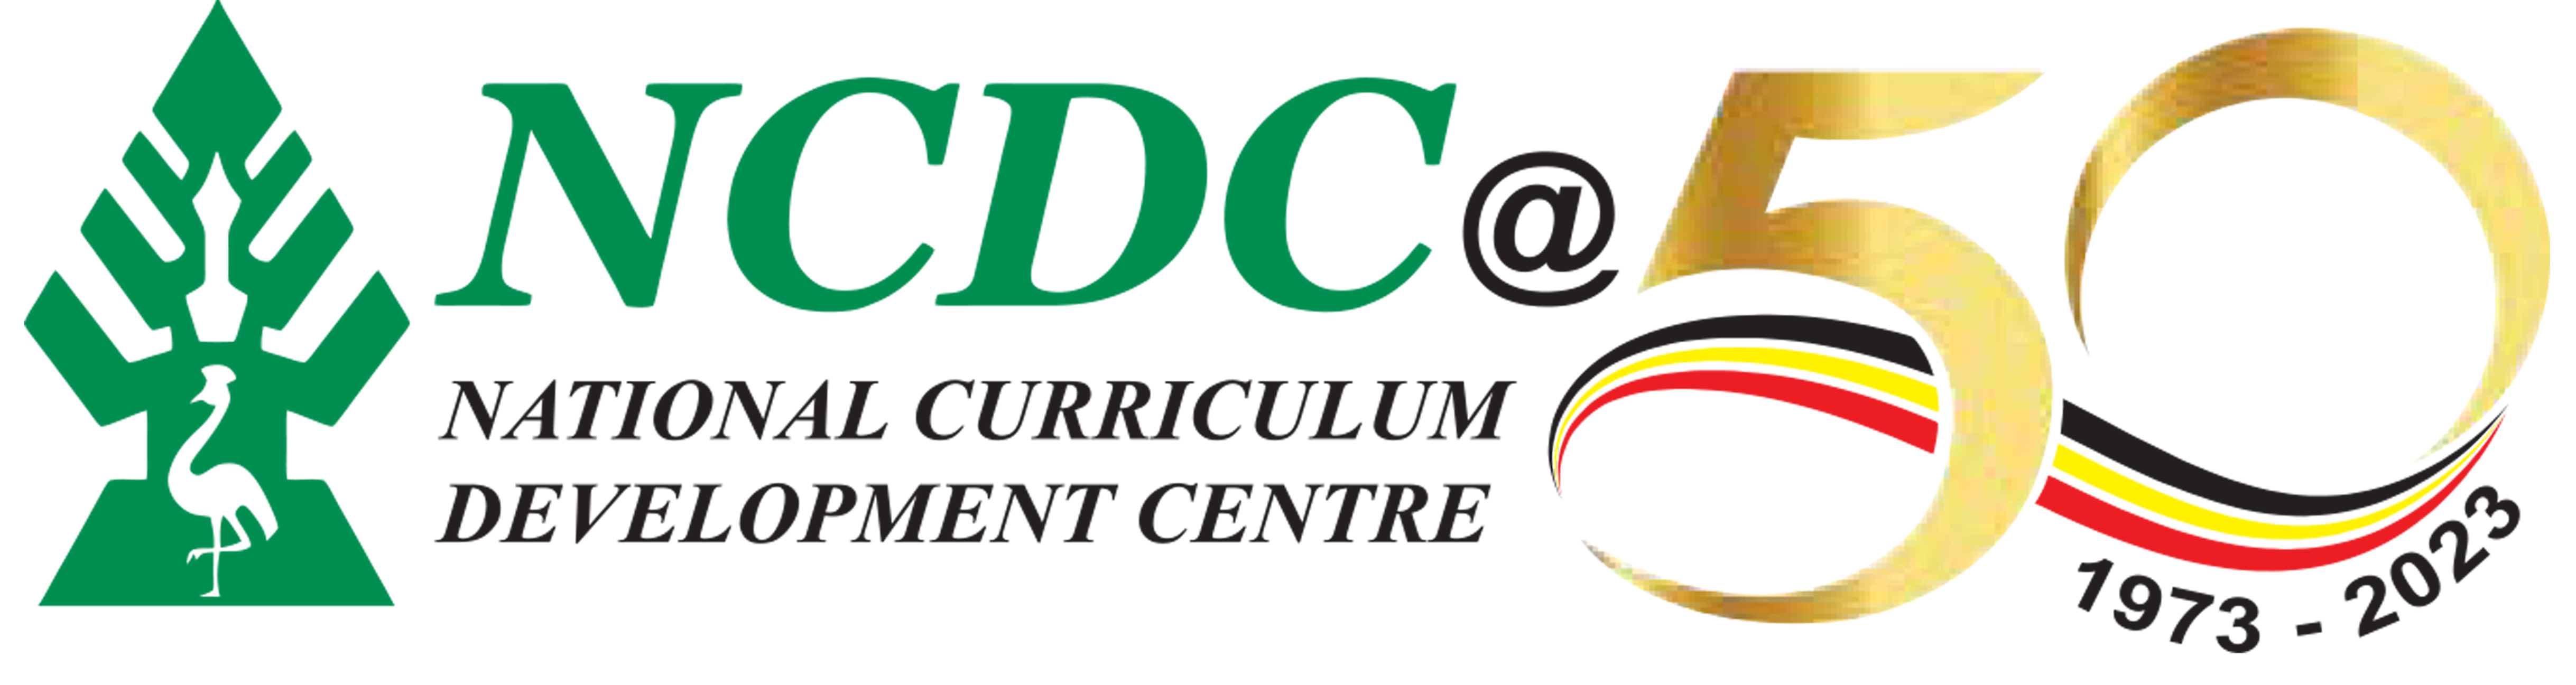 National Curriculum Development Centre (NCDC)